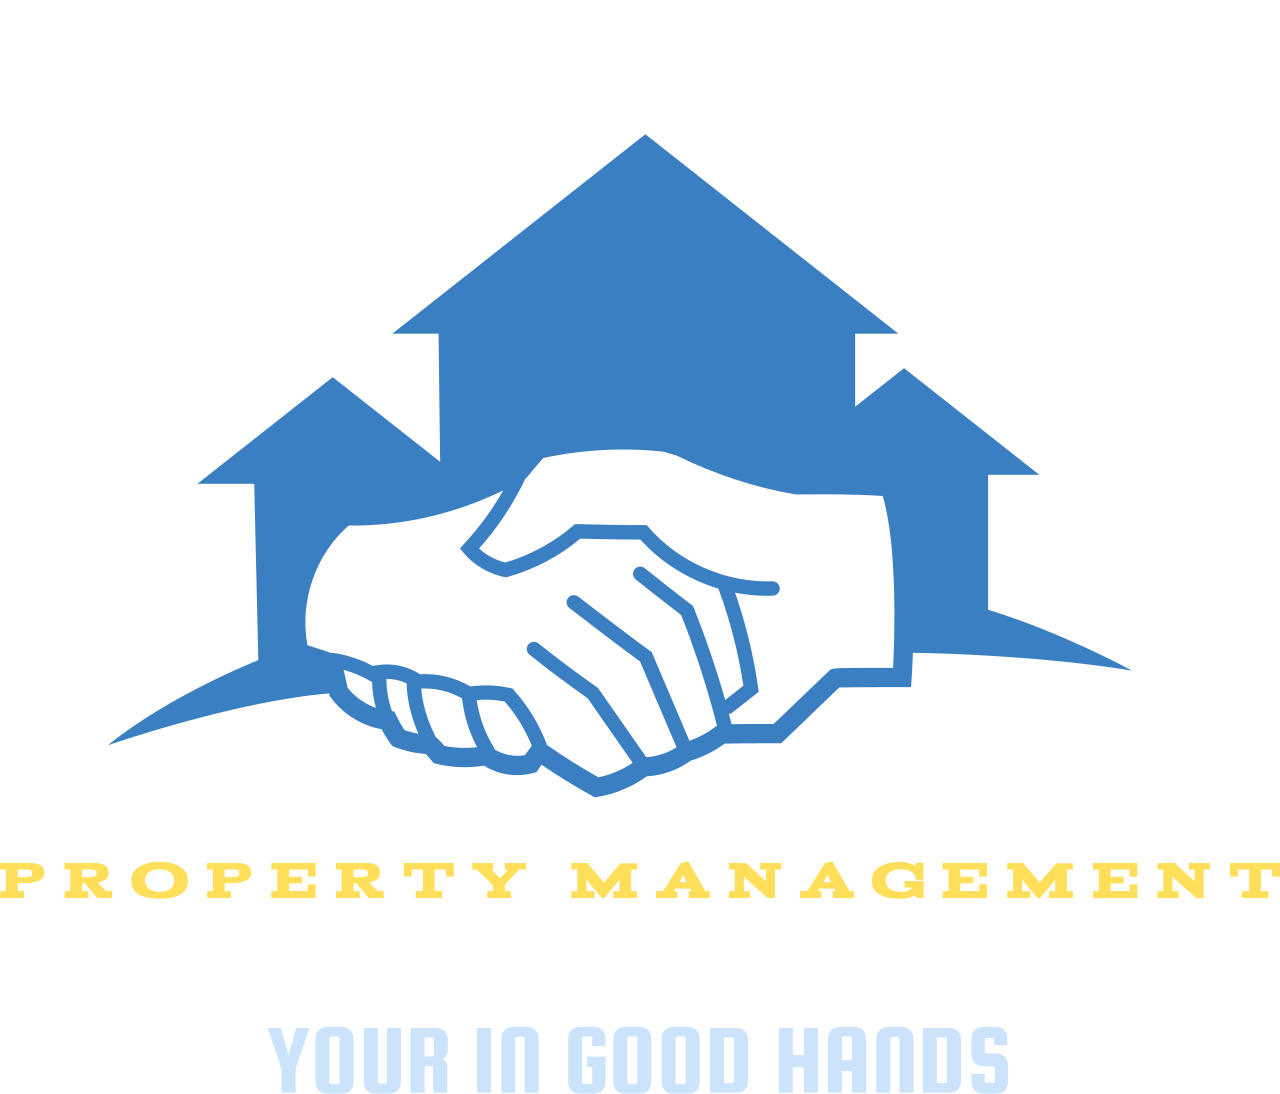 ORIGINAL 650 CREW LLC's logo